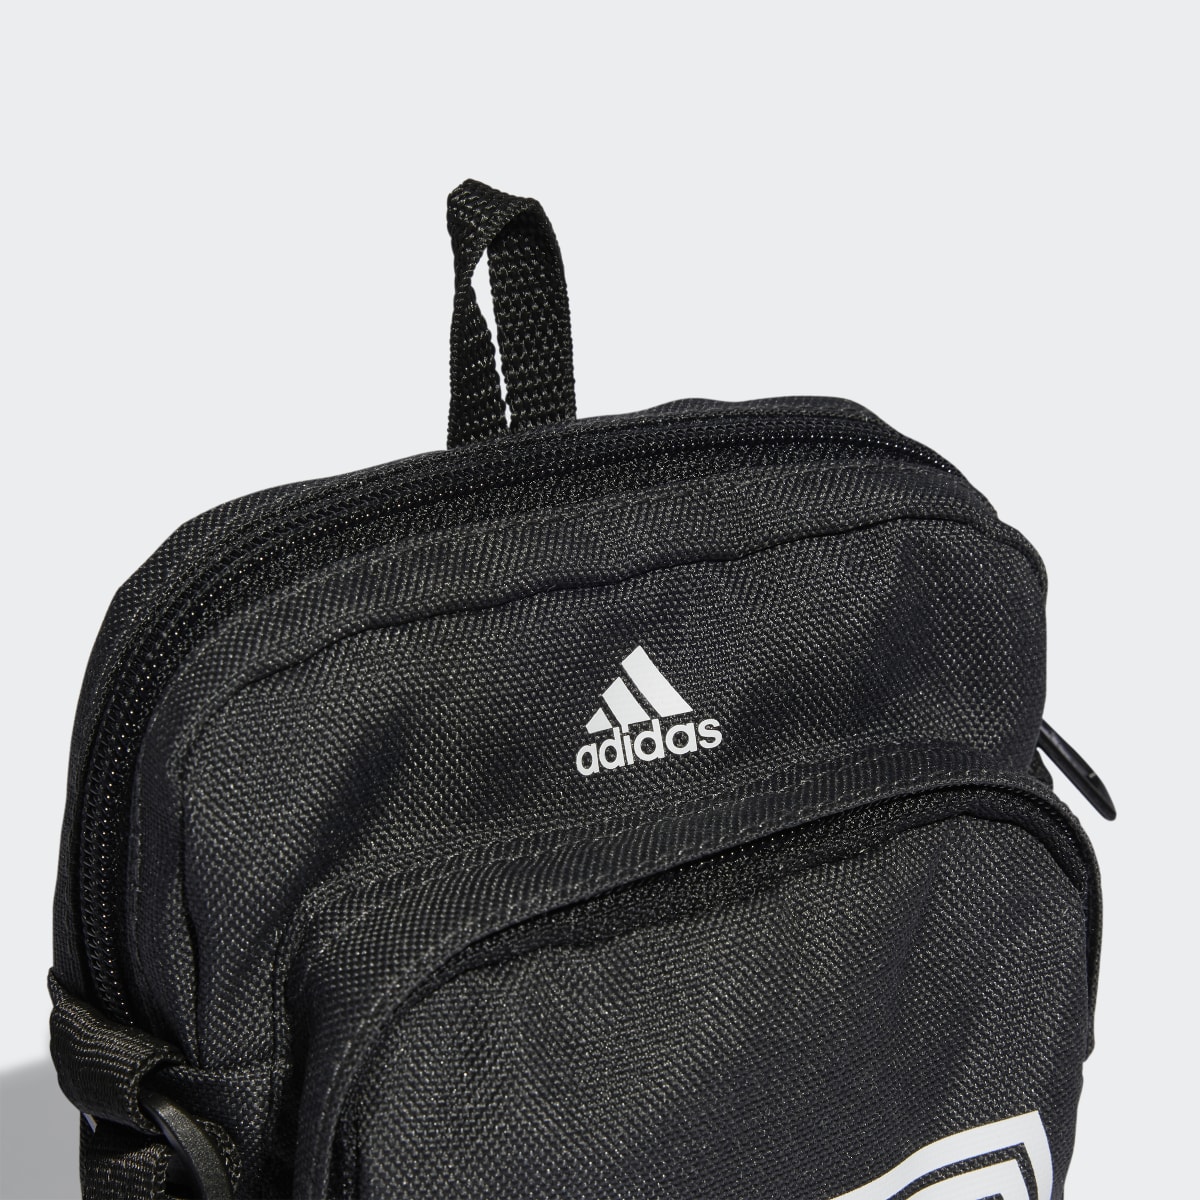 Adidas Classic Brand Love Initial Print Organizer Bag. 7